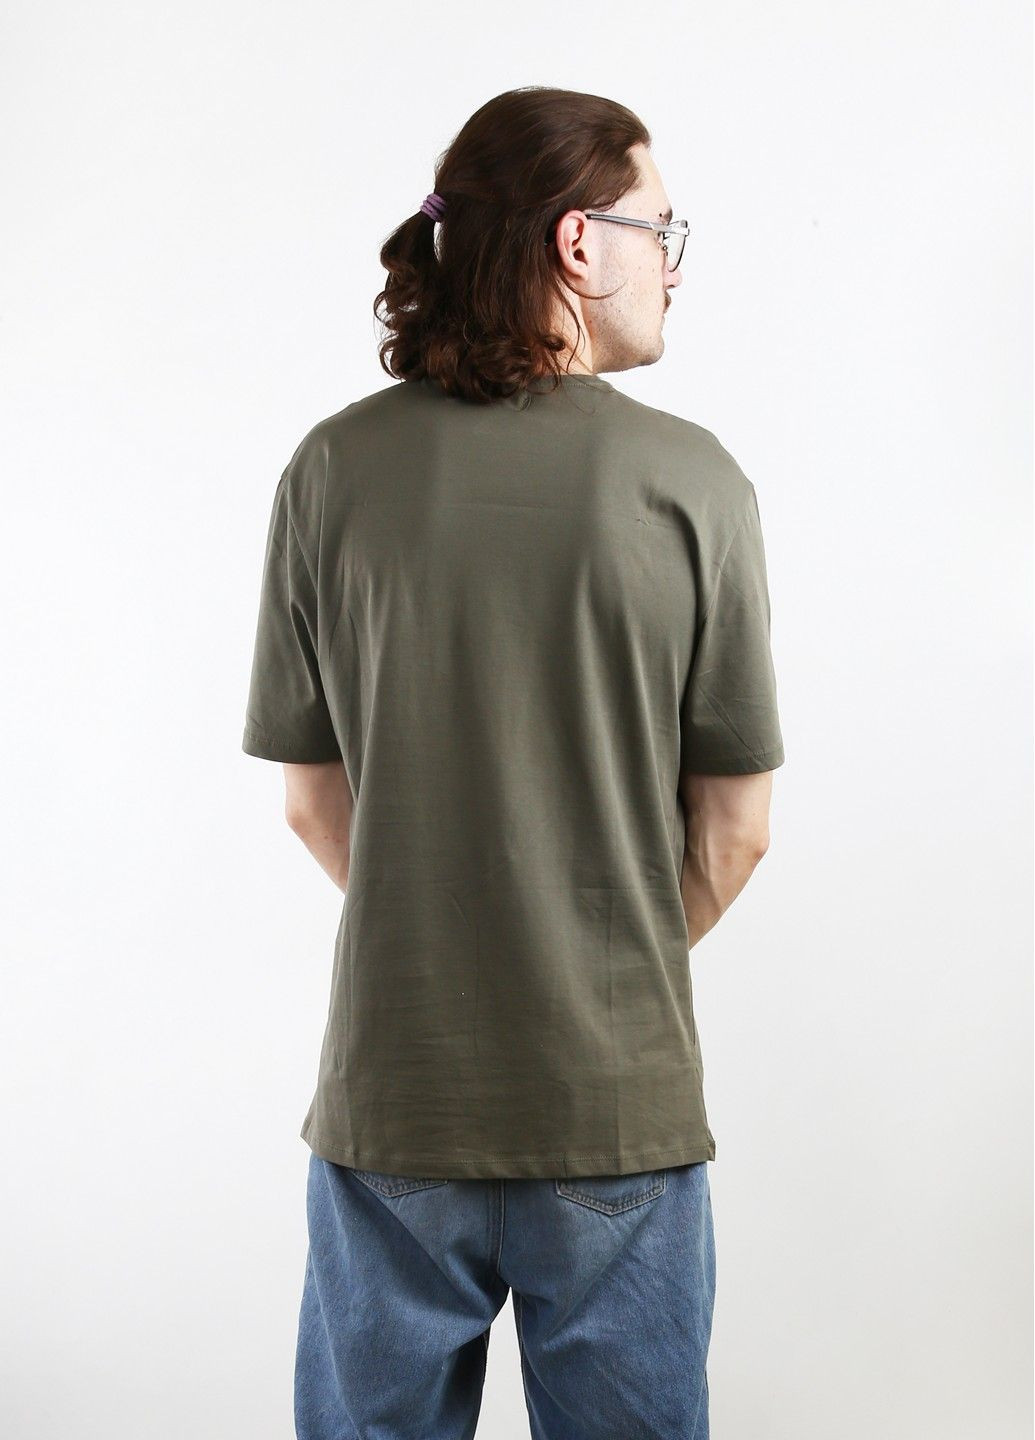 Хаки (оливковая) футболка Mtp